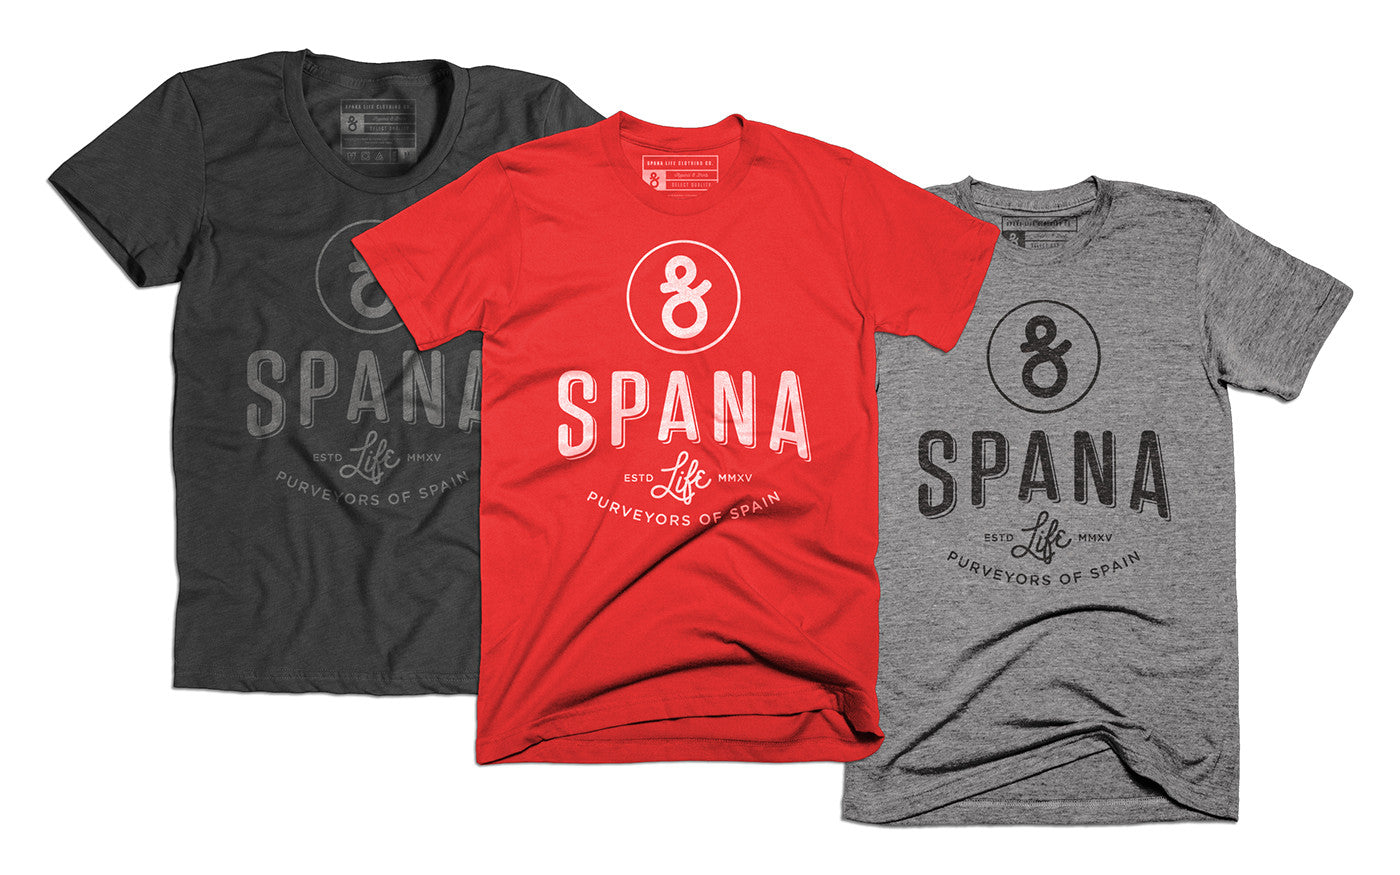 Spana Life Co. Tee shirt